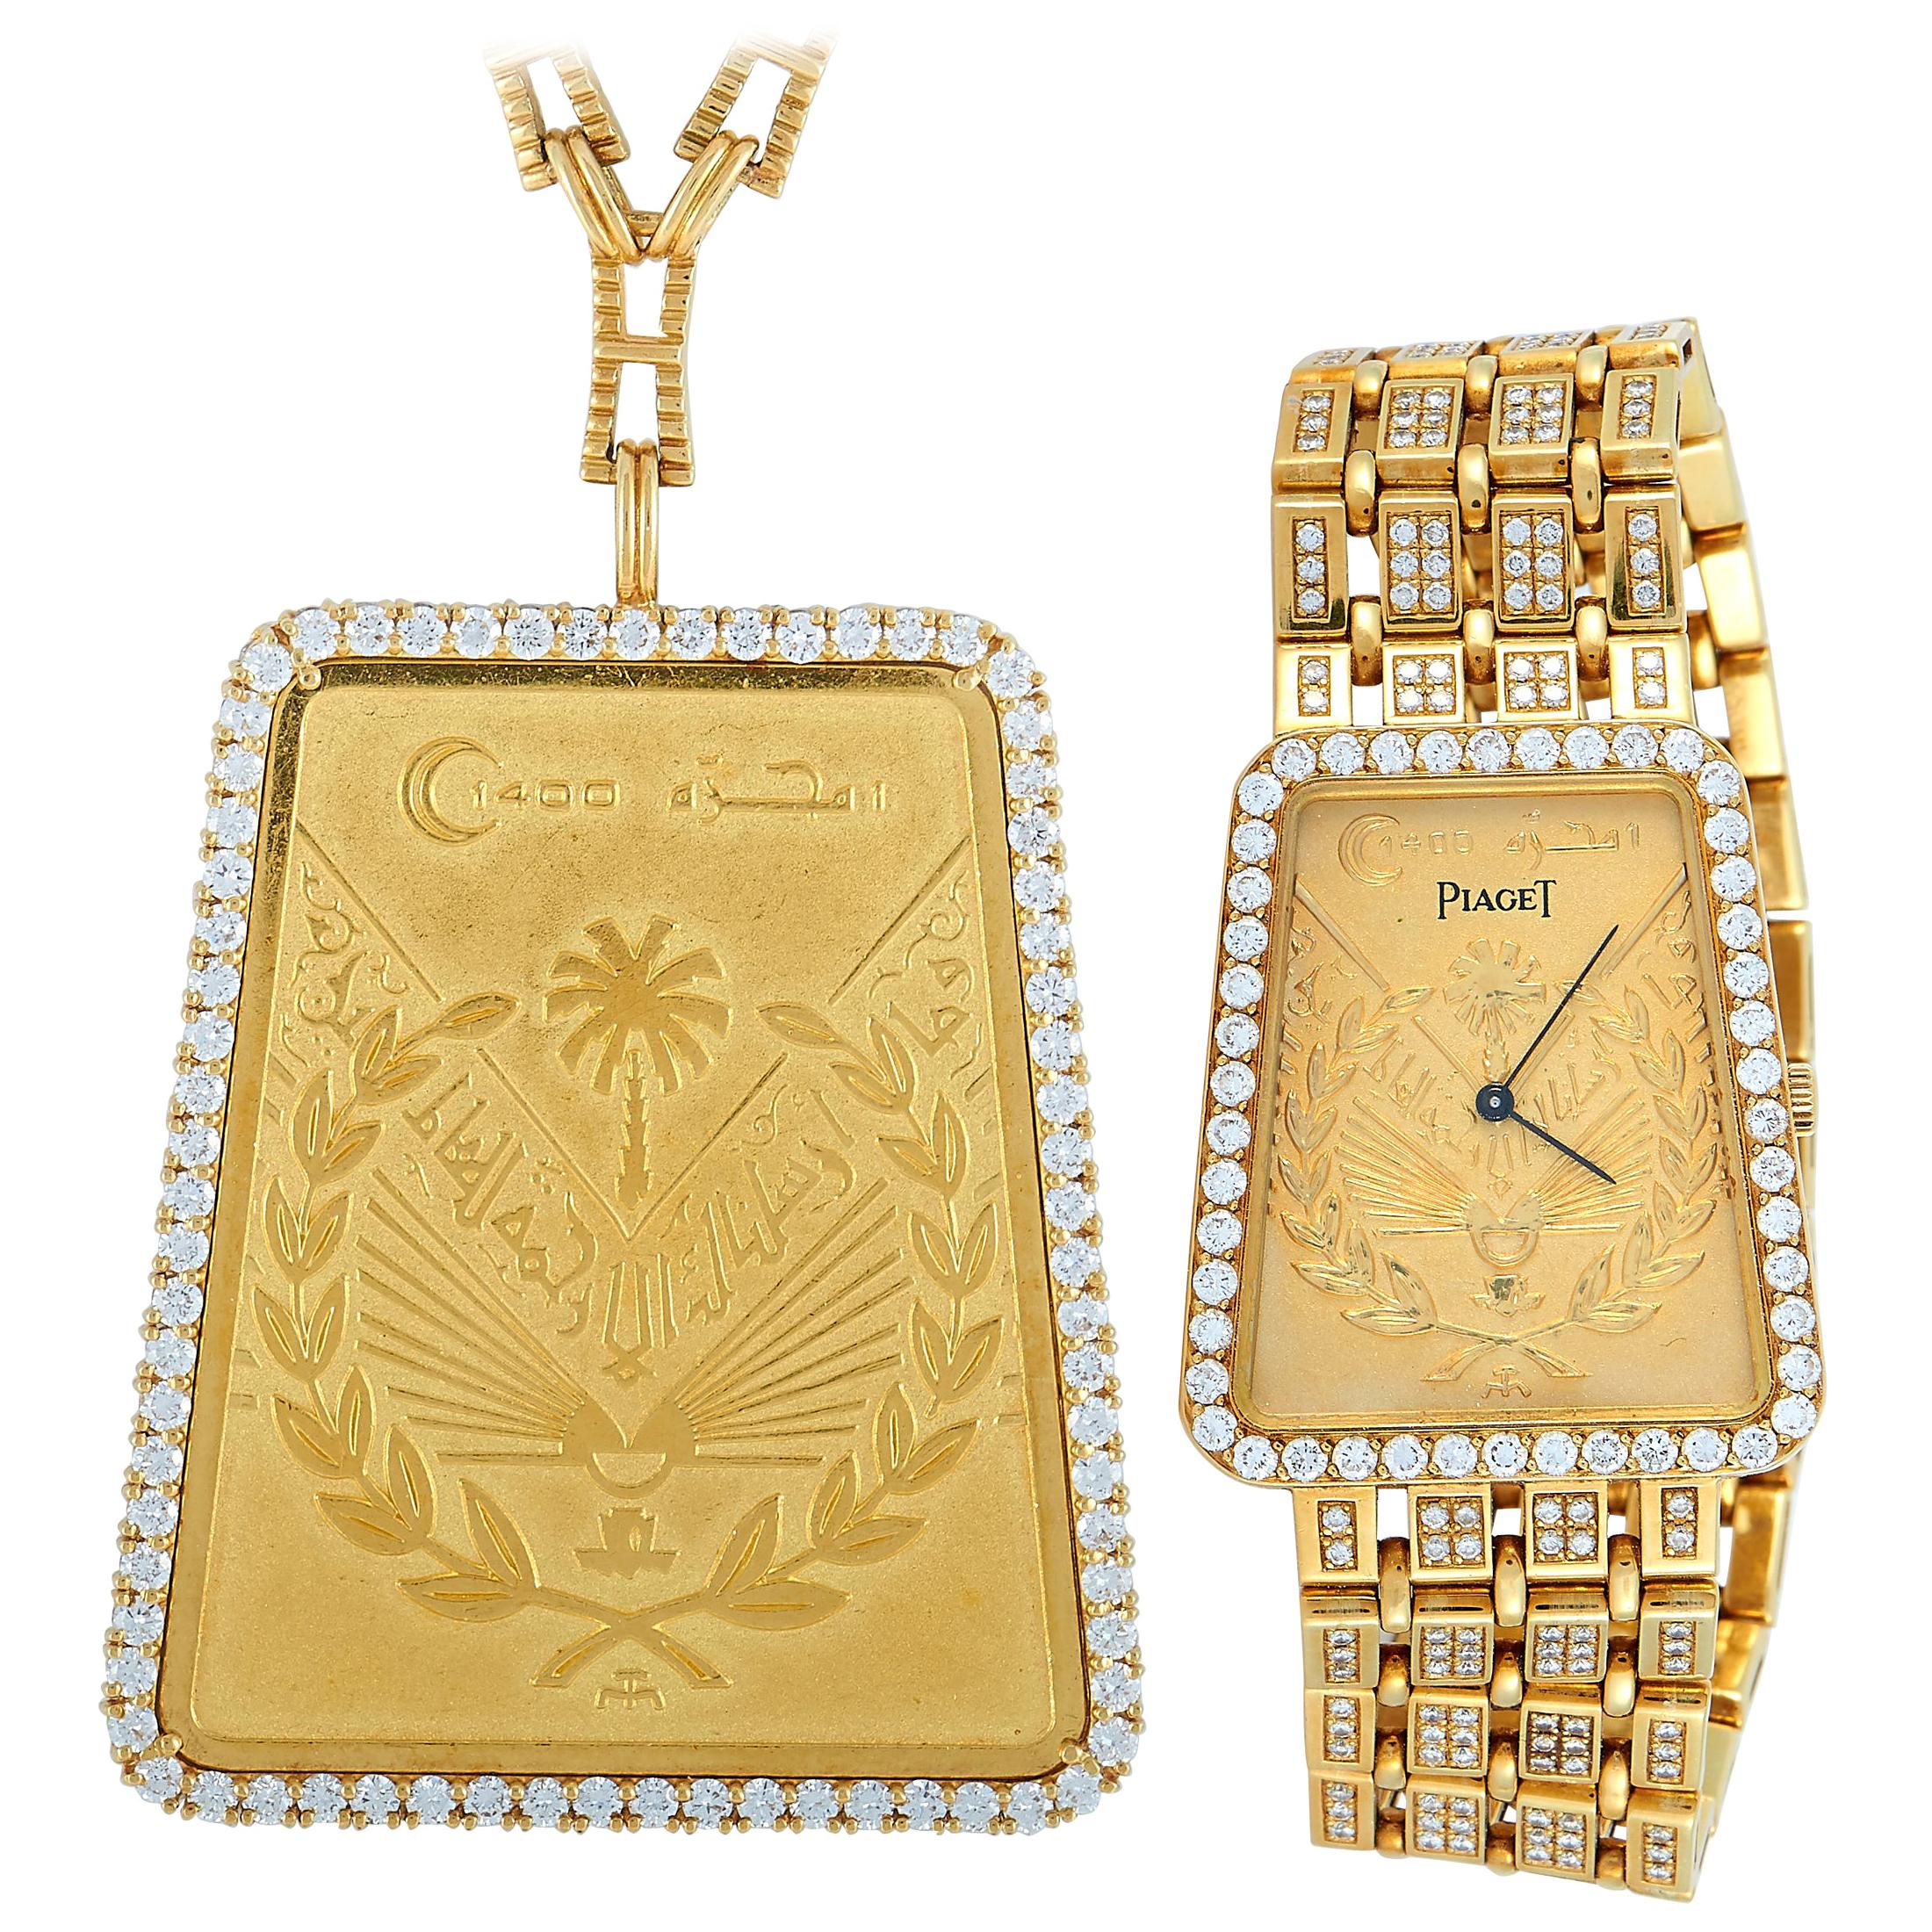 Piaget Vintage Hiriji Watch and Necklace Set